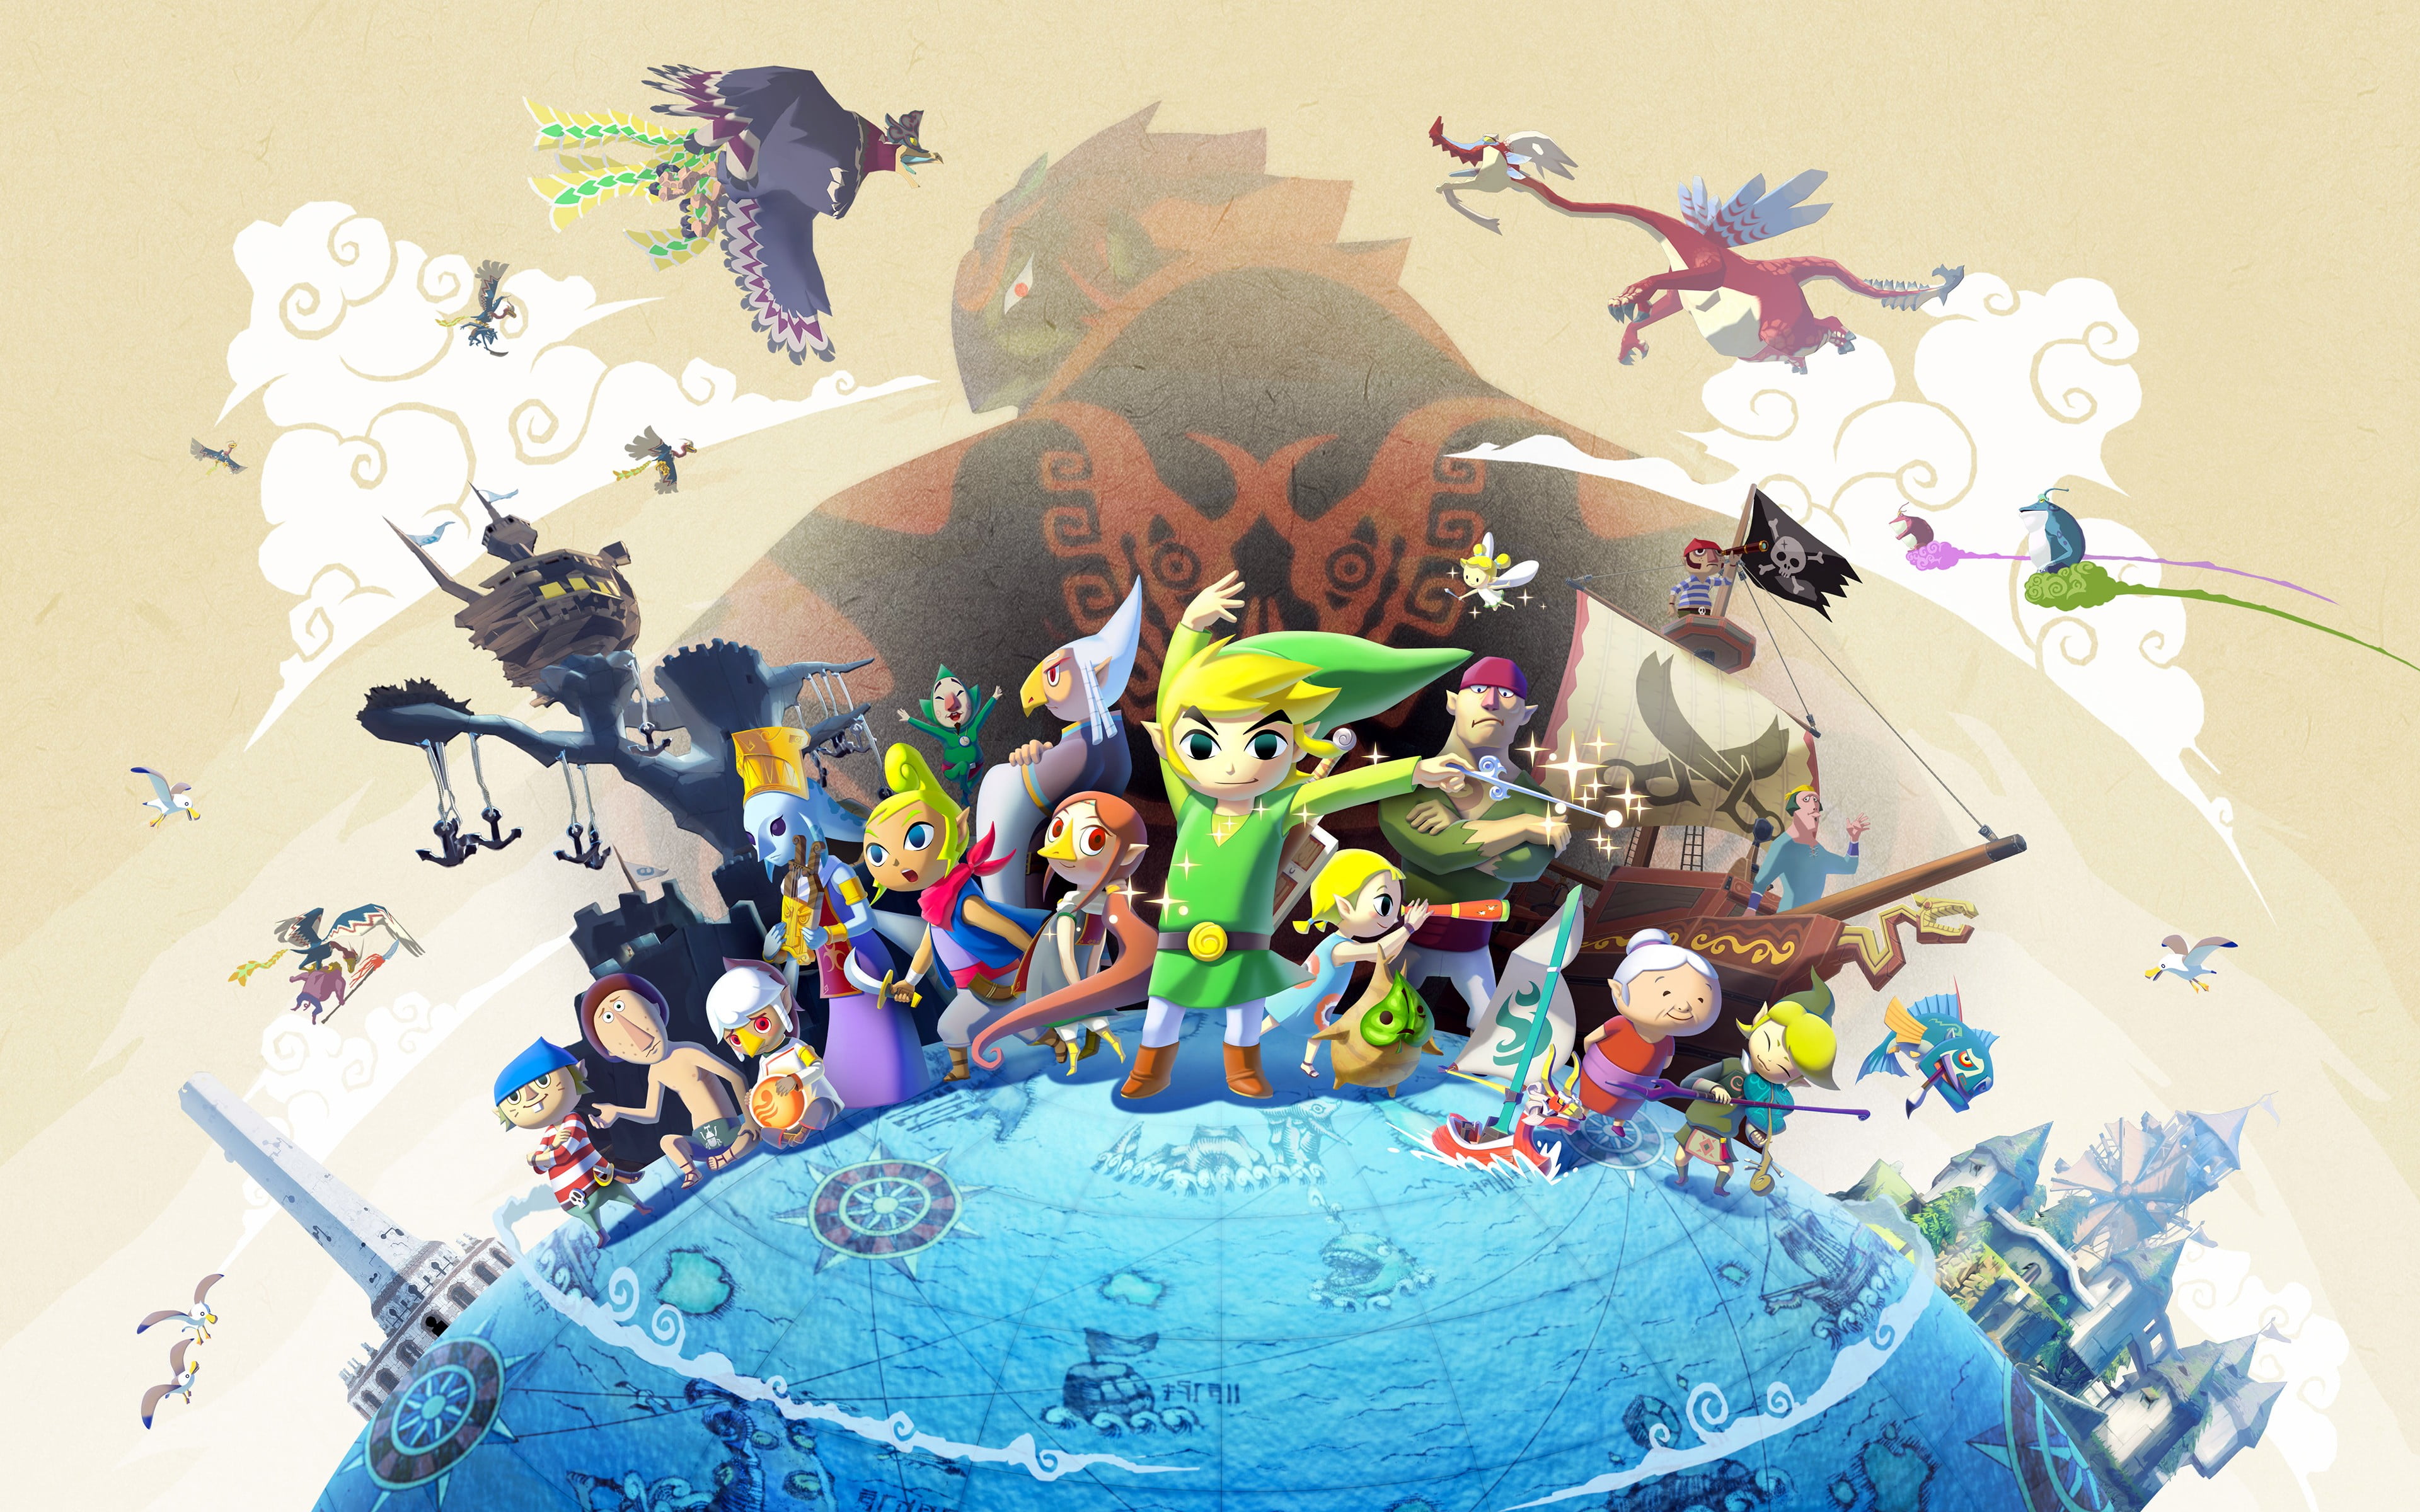 Wall.Cookdiary.net Legend of Zelda: Link's Awakening